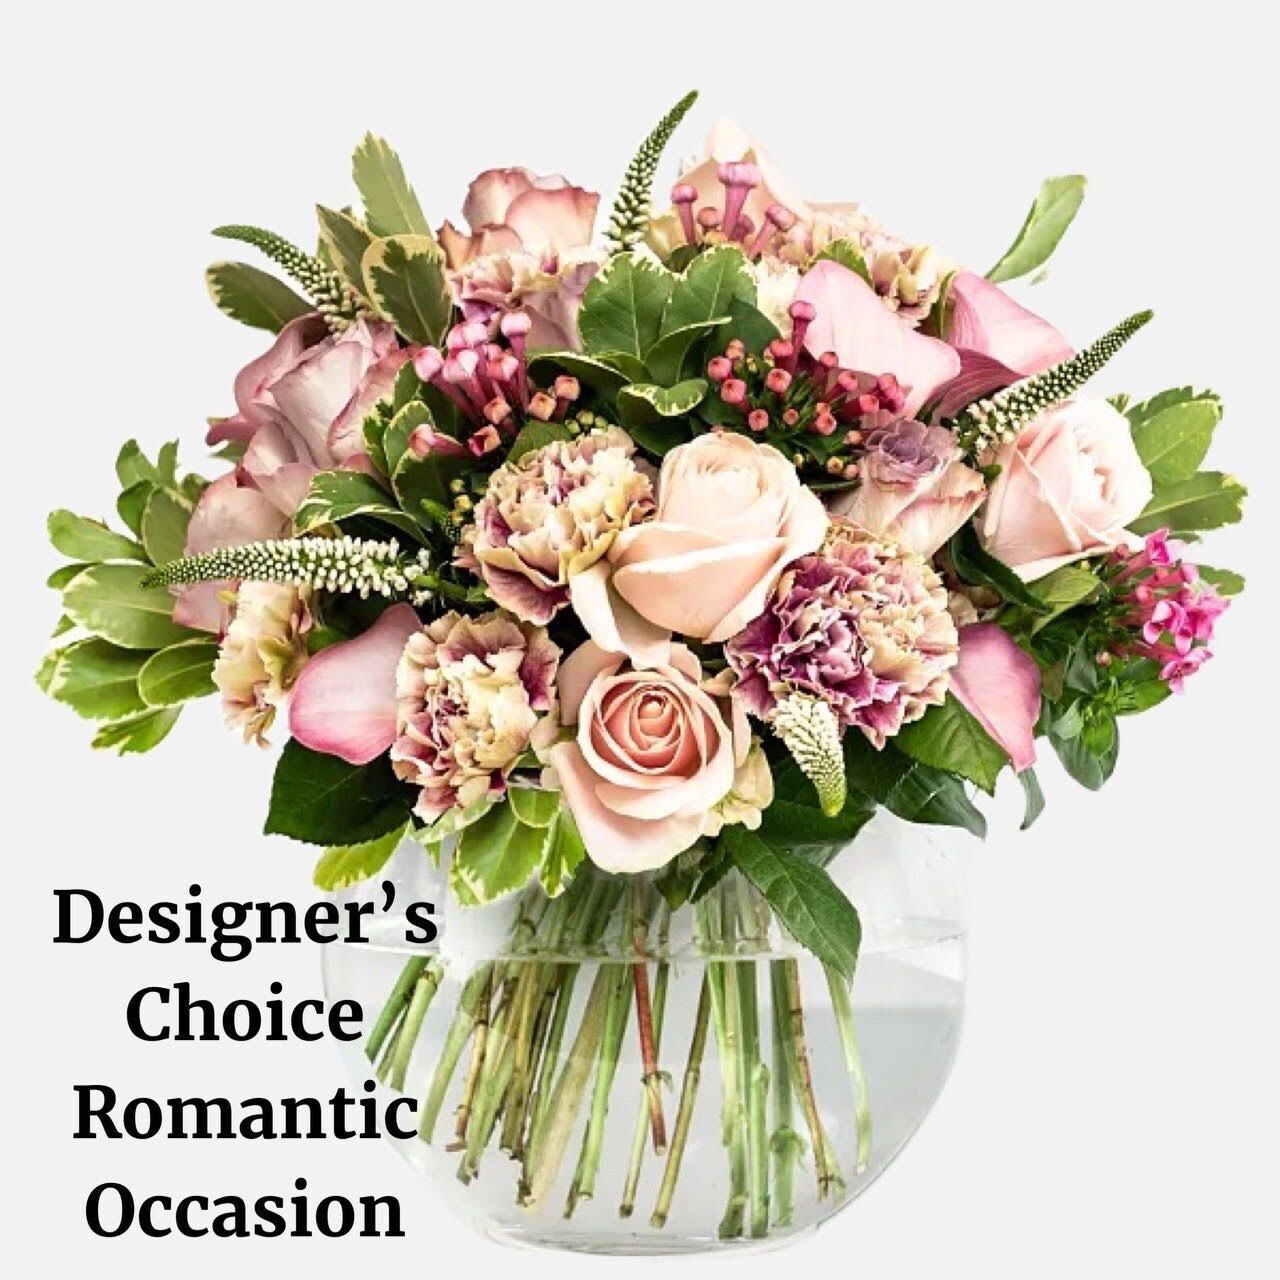 Designer's Choice Romantic Occasion - Deluxe